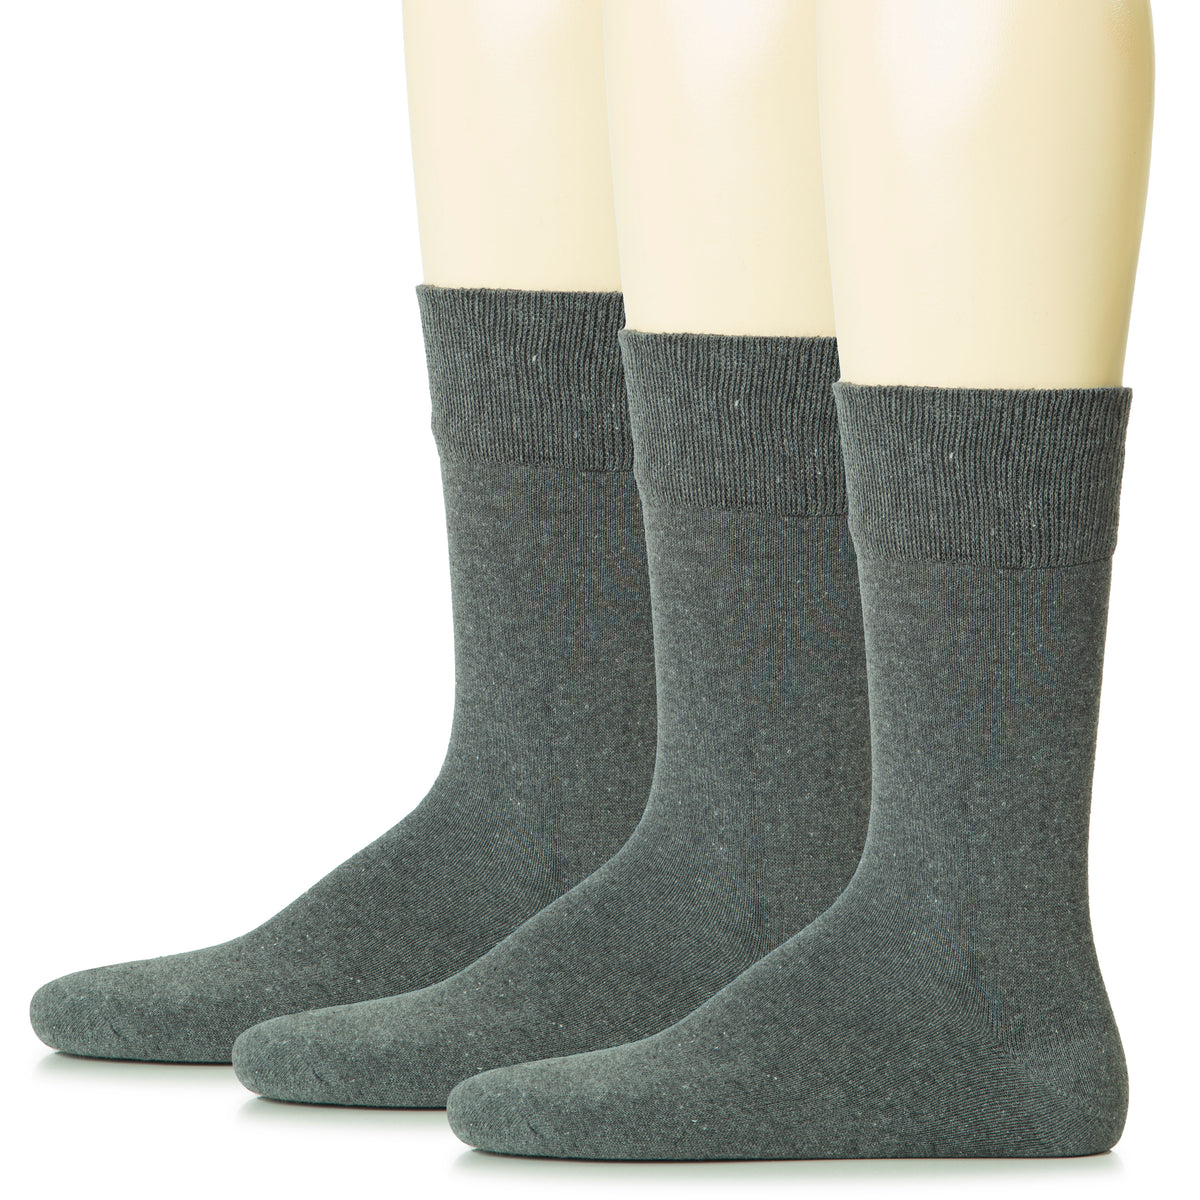 Hugh Ugoli Men Cotton Dress Socks XL / L / M / S Sizes, 3 Pairs | Shoe Size: 13-15 | Dark Gray